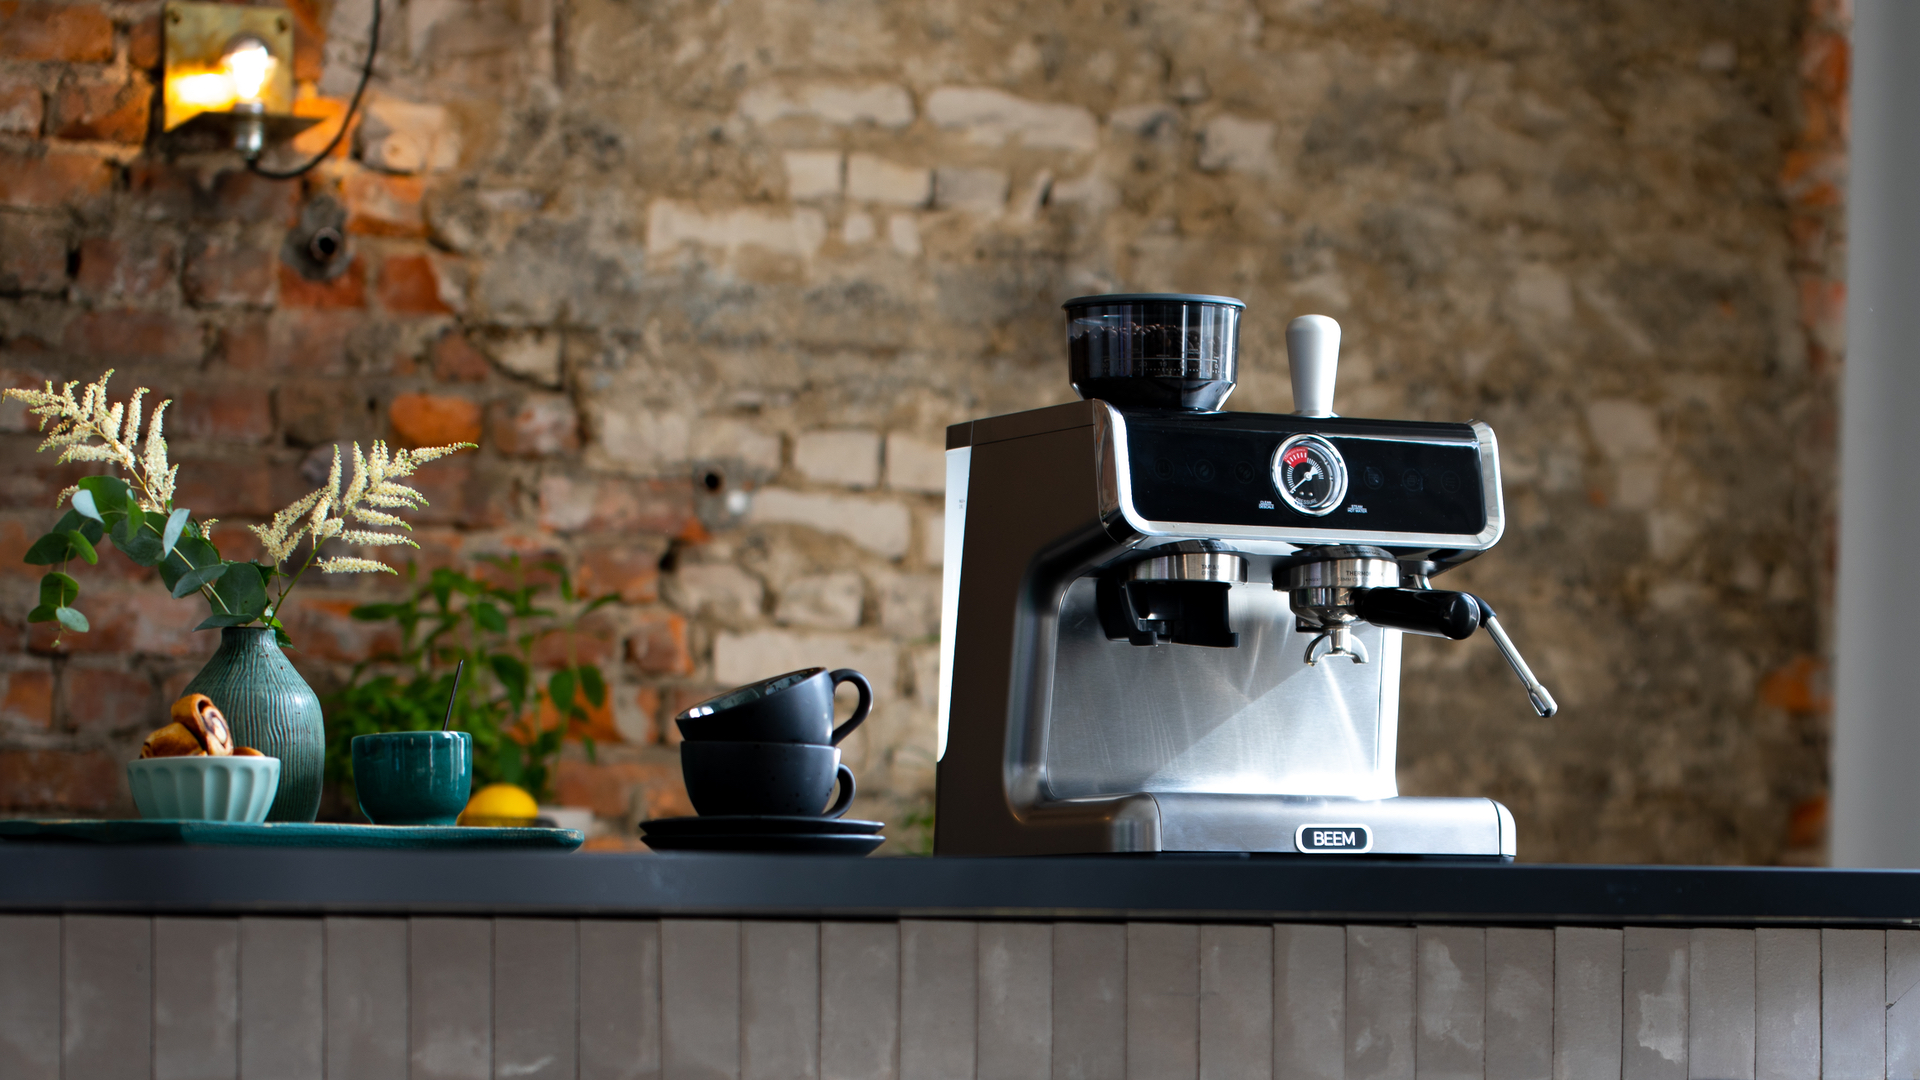 Beem Espresso Grind Profession review: the best espresso machine I've tried